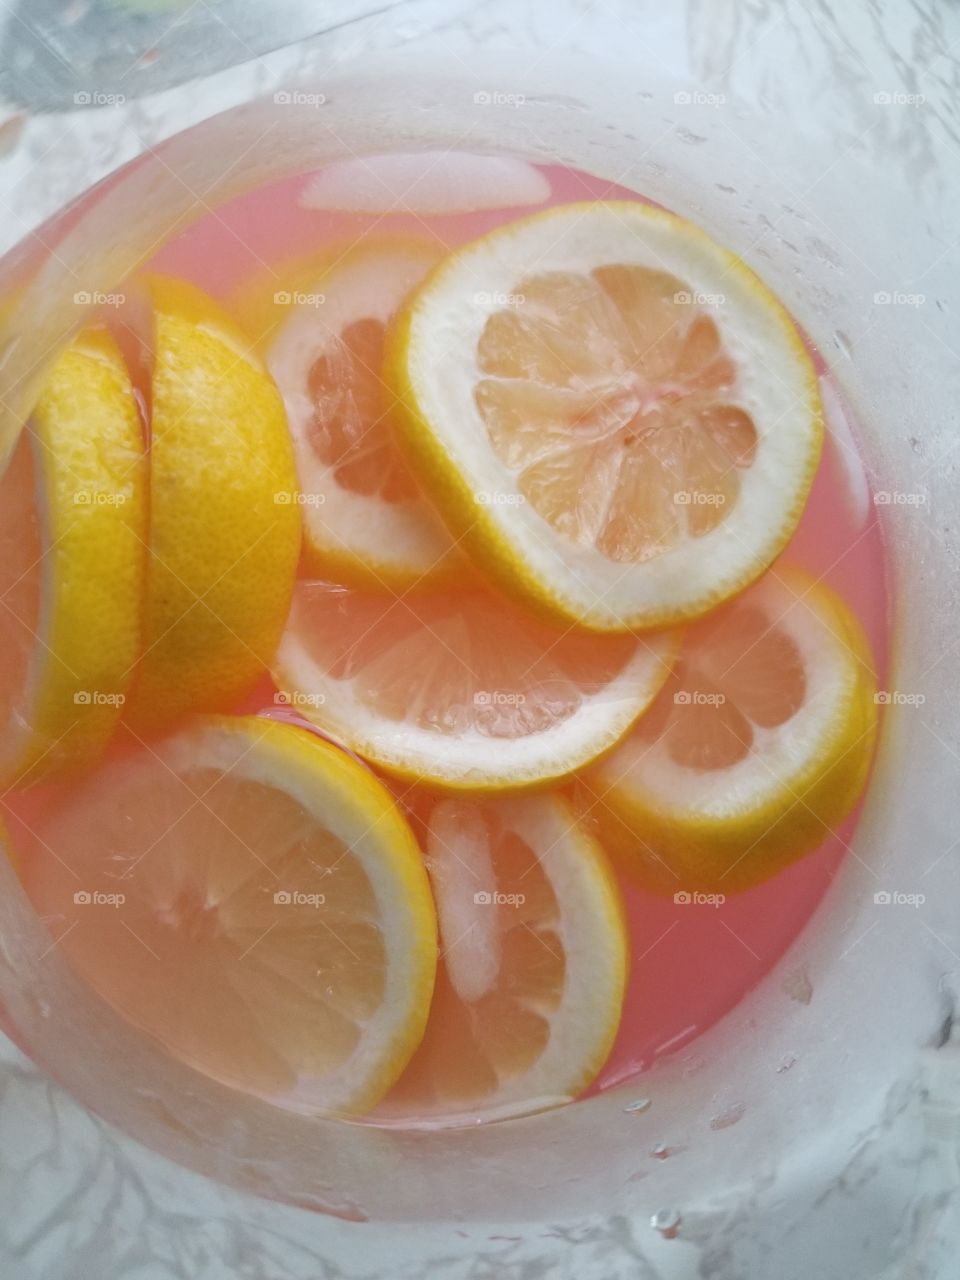 Cold Lemonade For A Hot Dummer Day